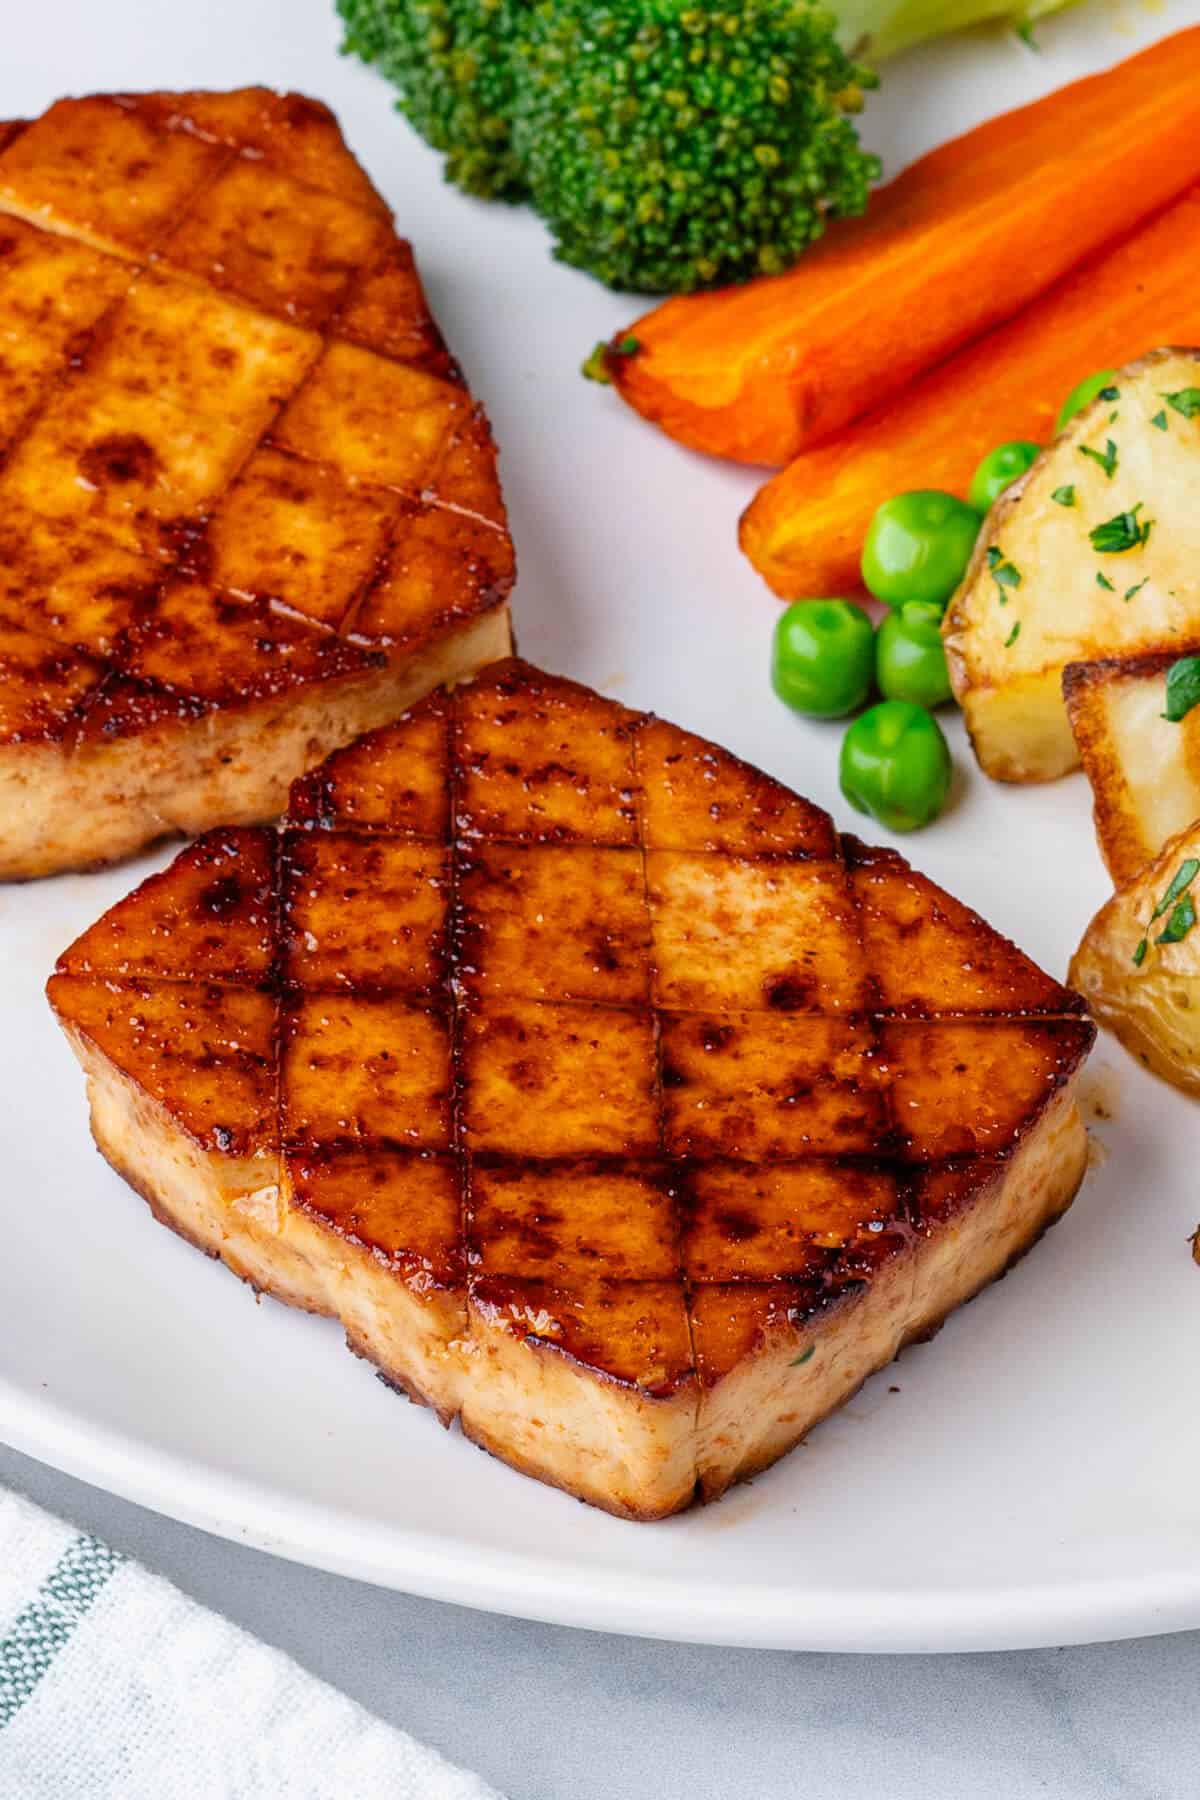 Tofu steak served with veggies